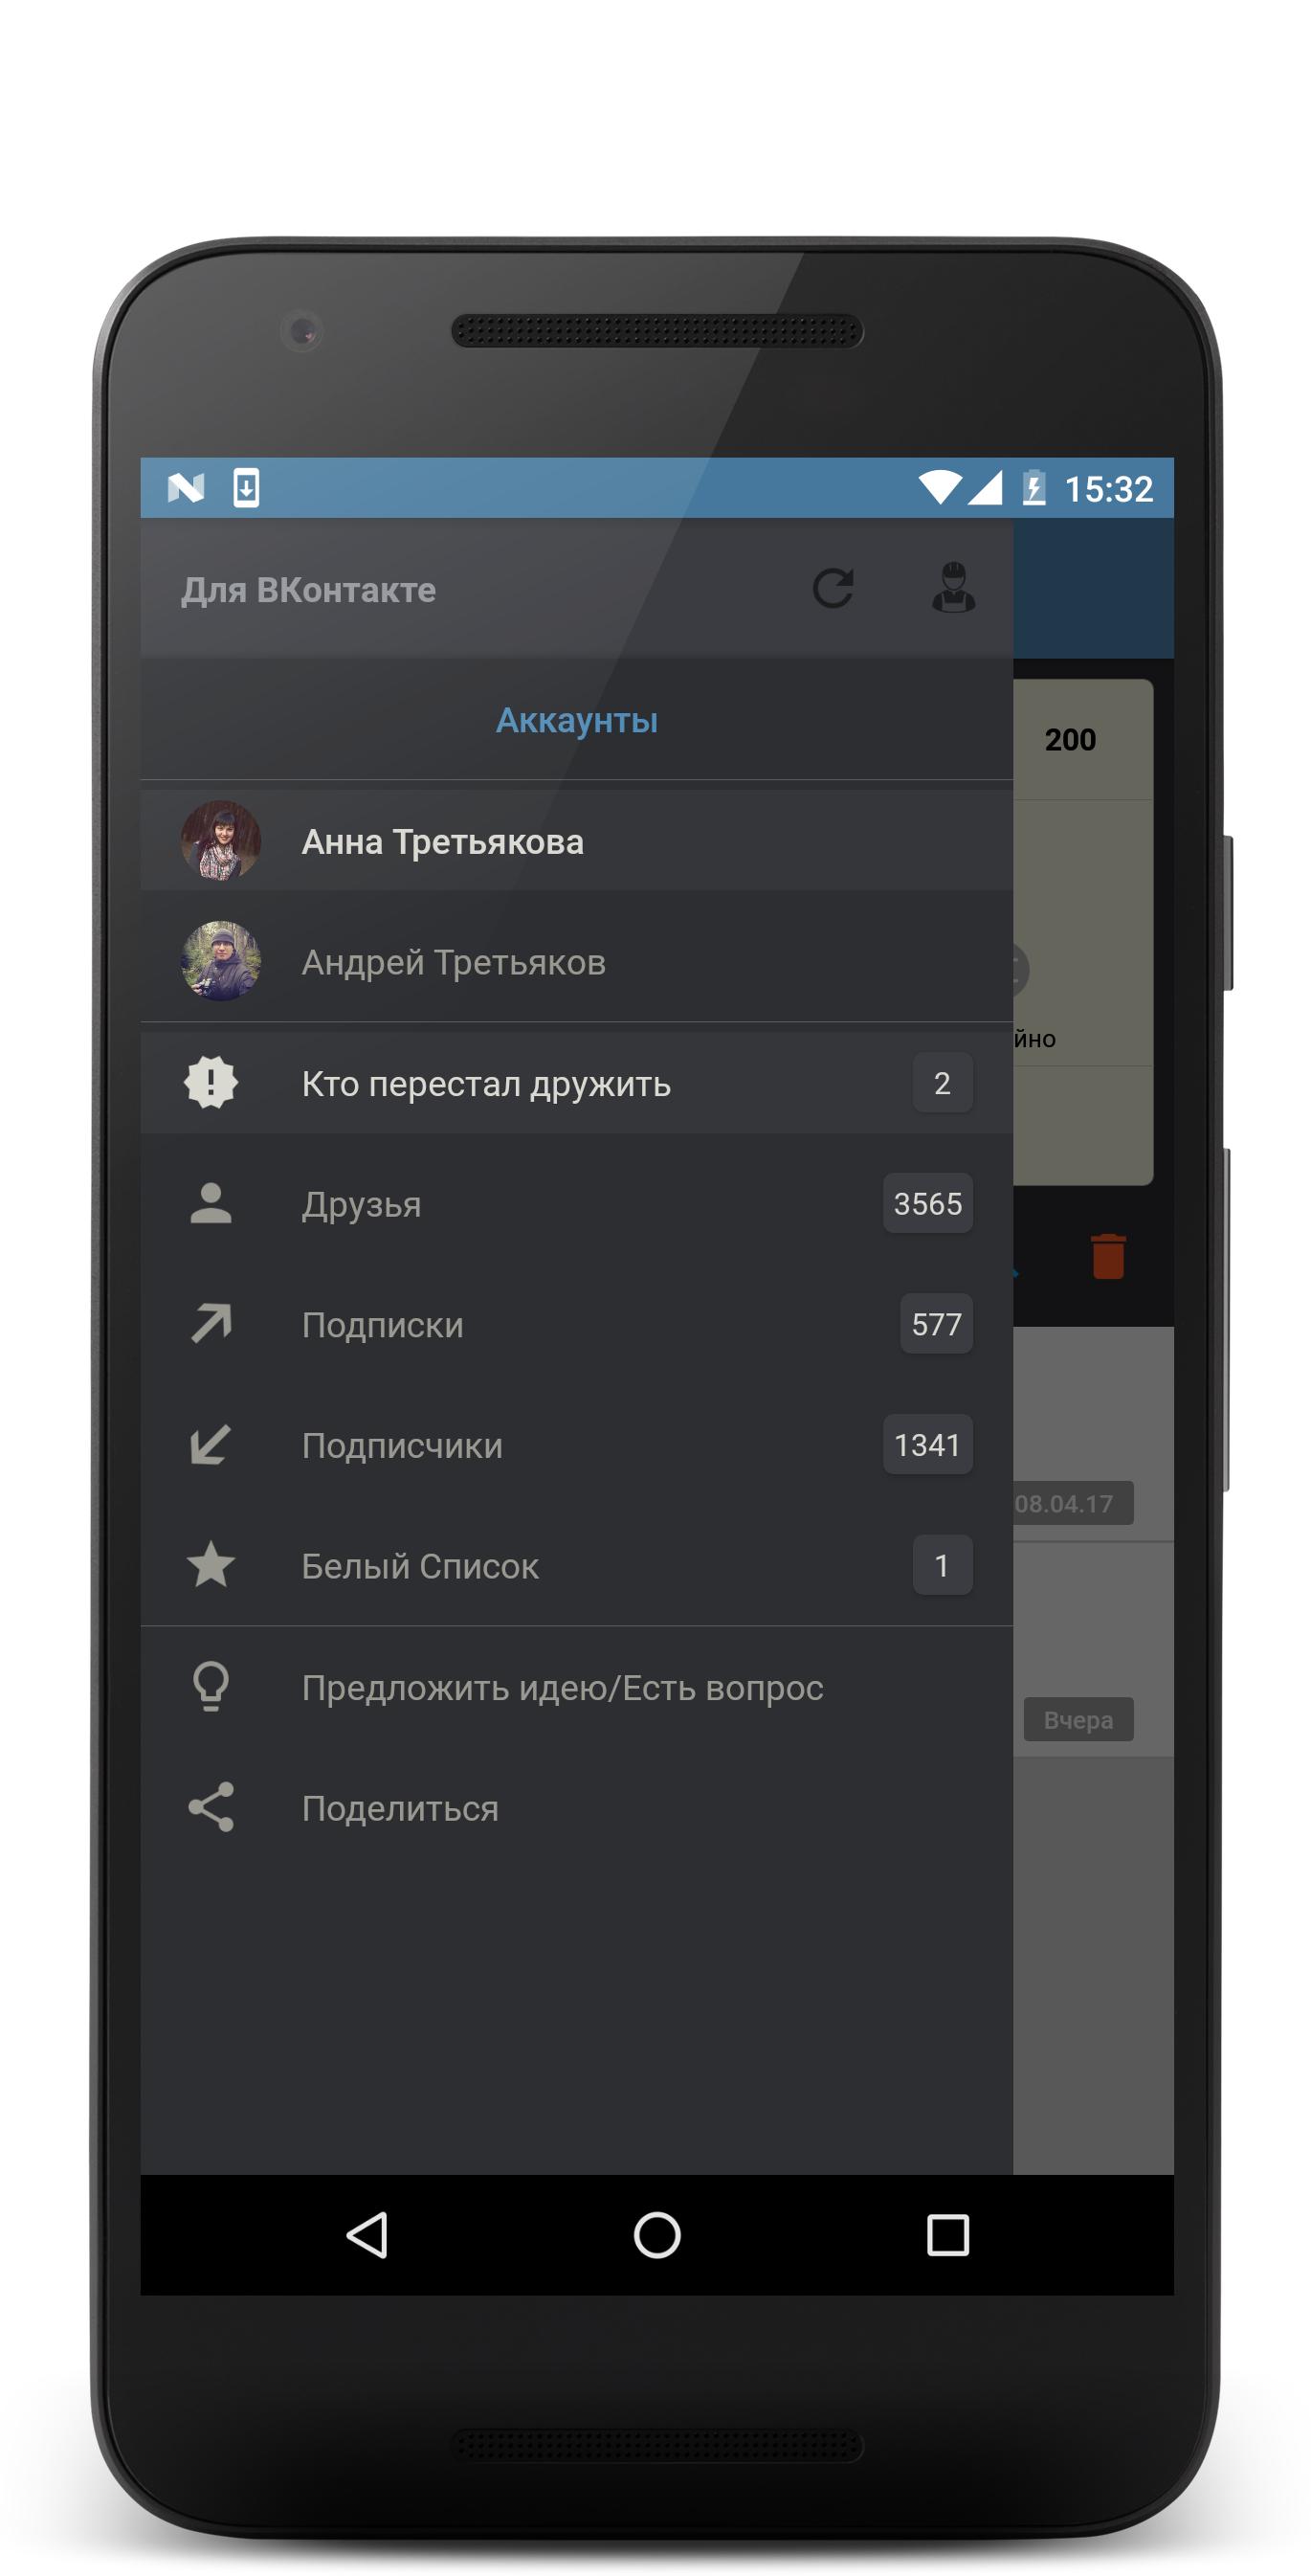 Вк андроид apk. Офлайн ВК. Google account Manager for Android 4.0.